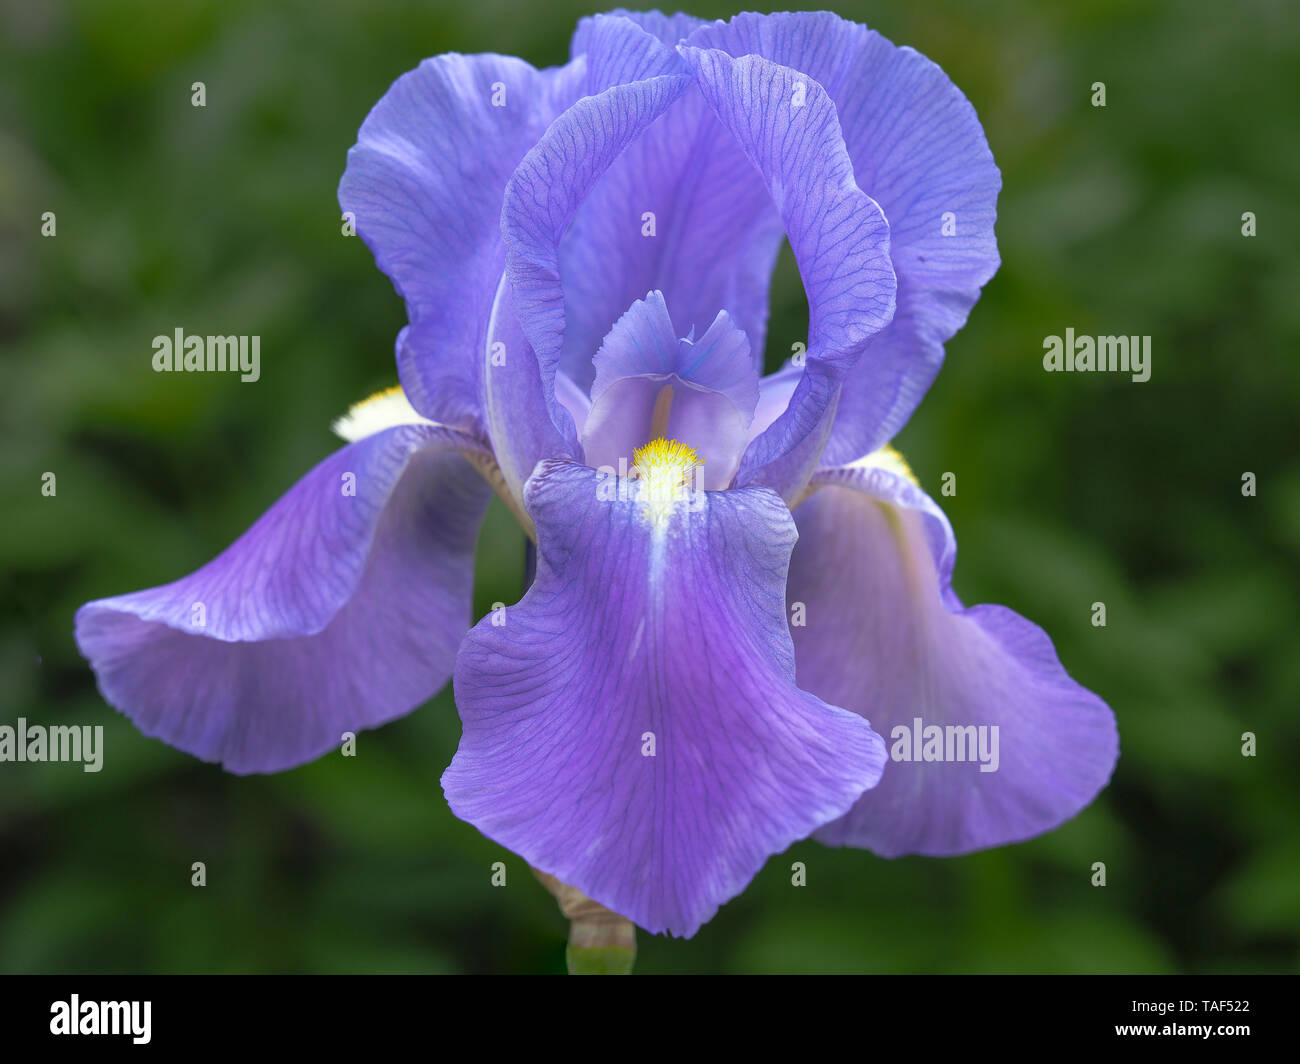 Beautiful mauve coloured iris flower in a summer garden Stock Photo